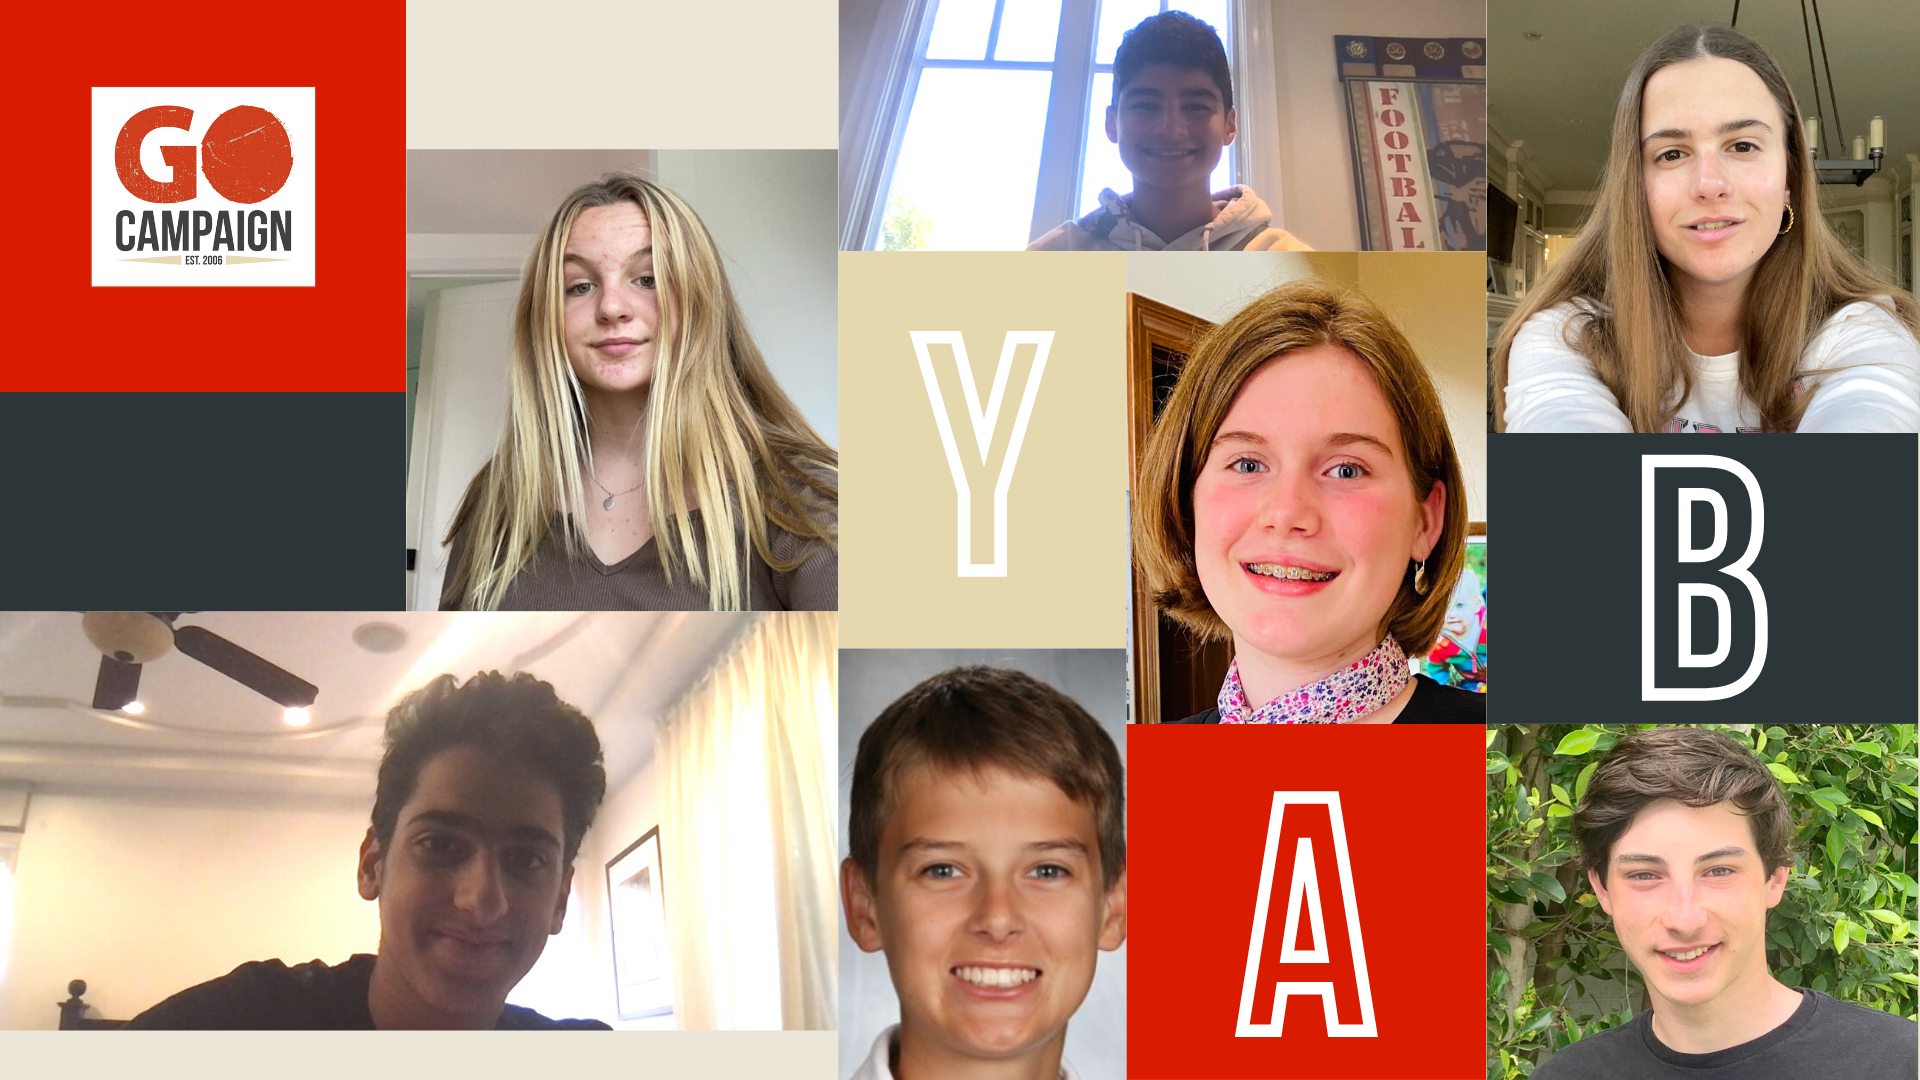 Meet the GO Campaign Youth Advisory Board